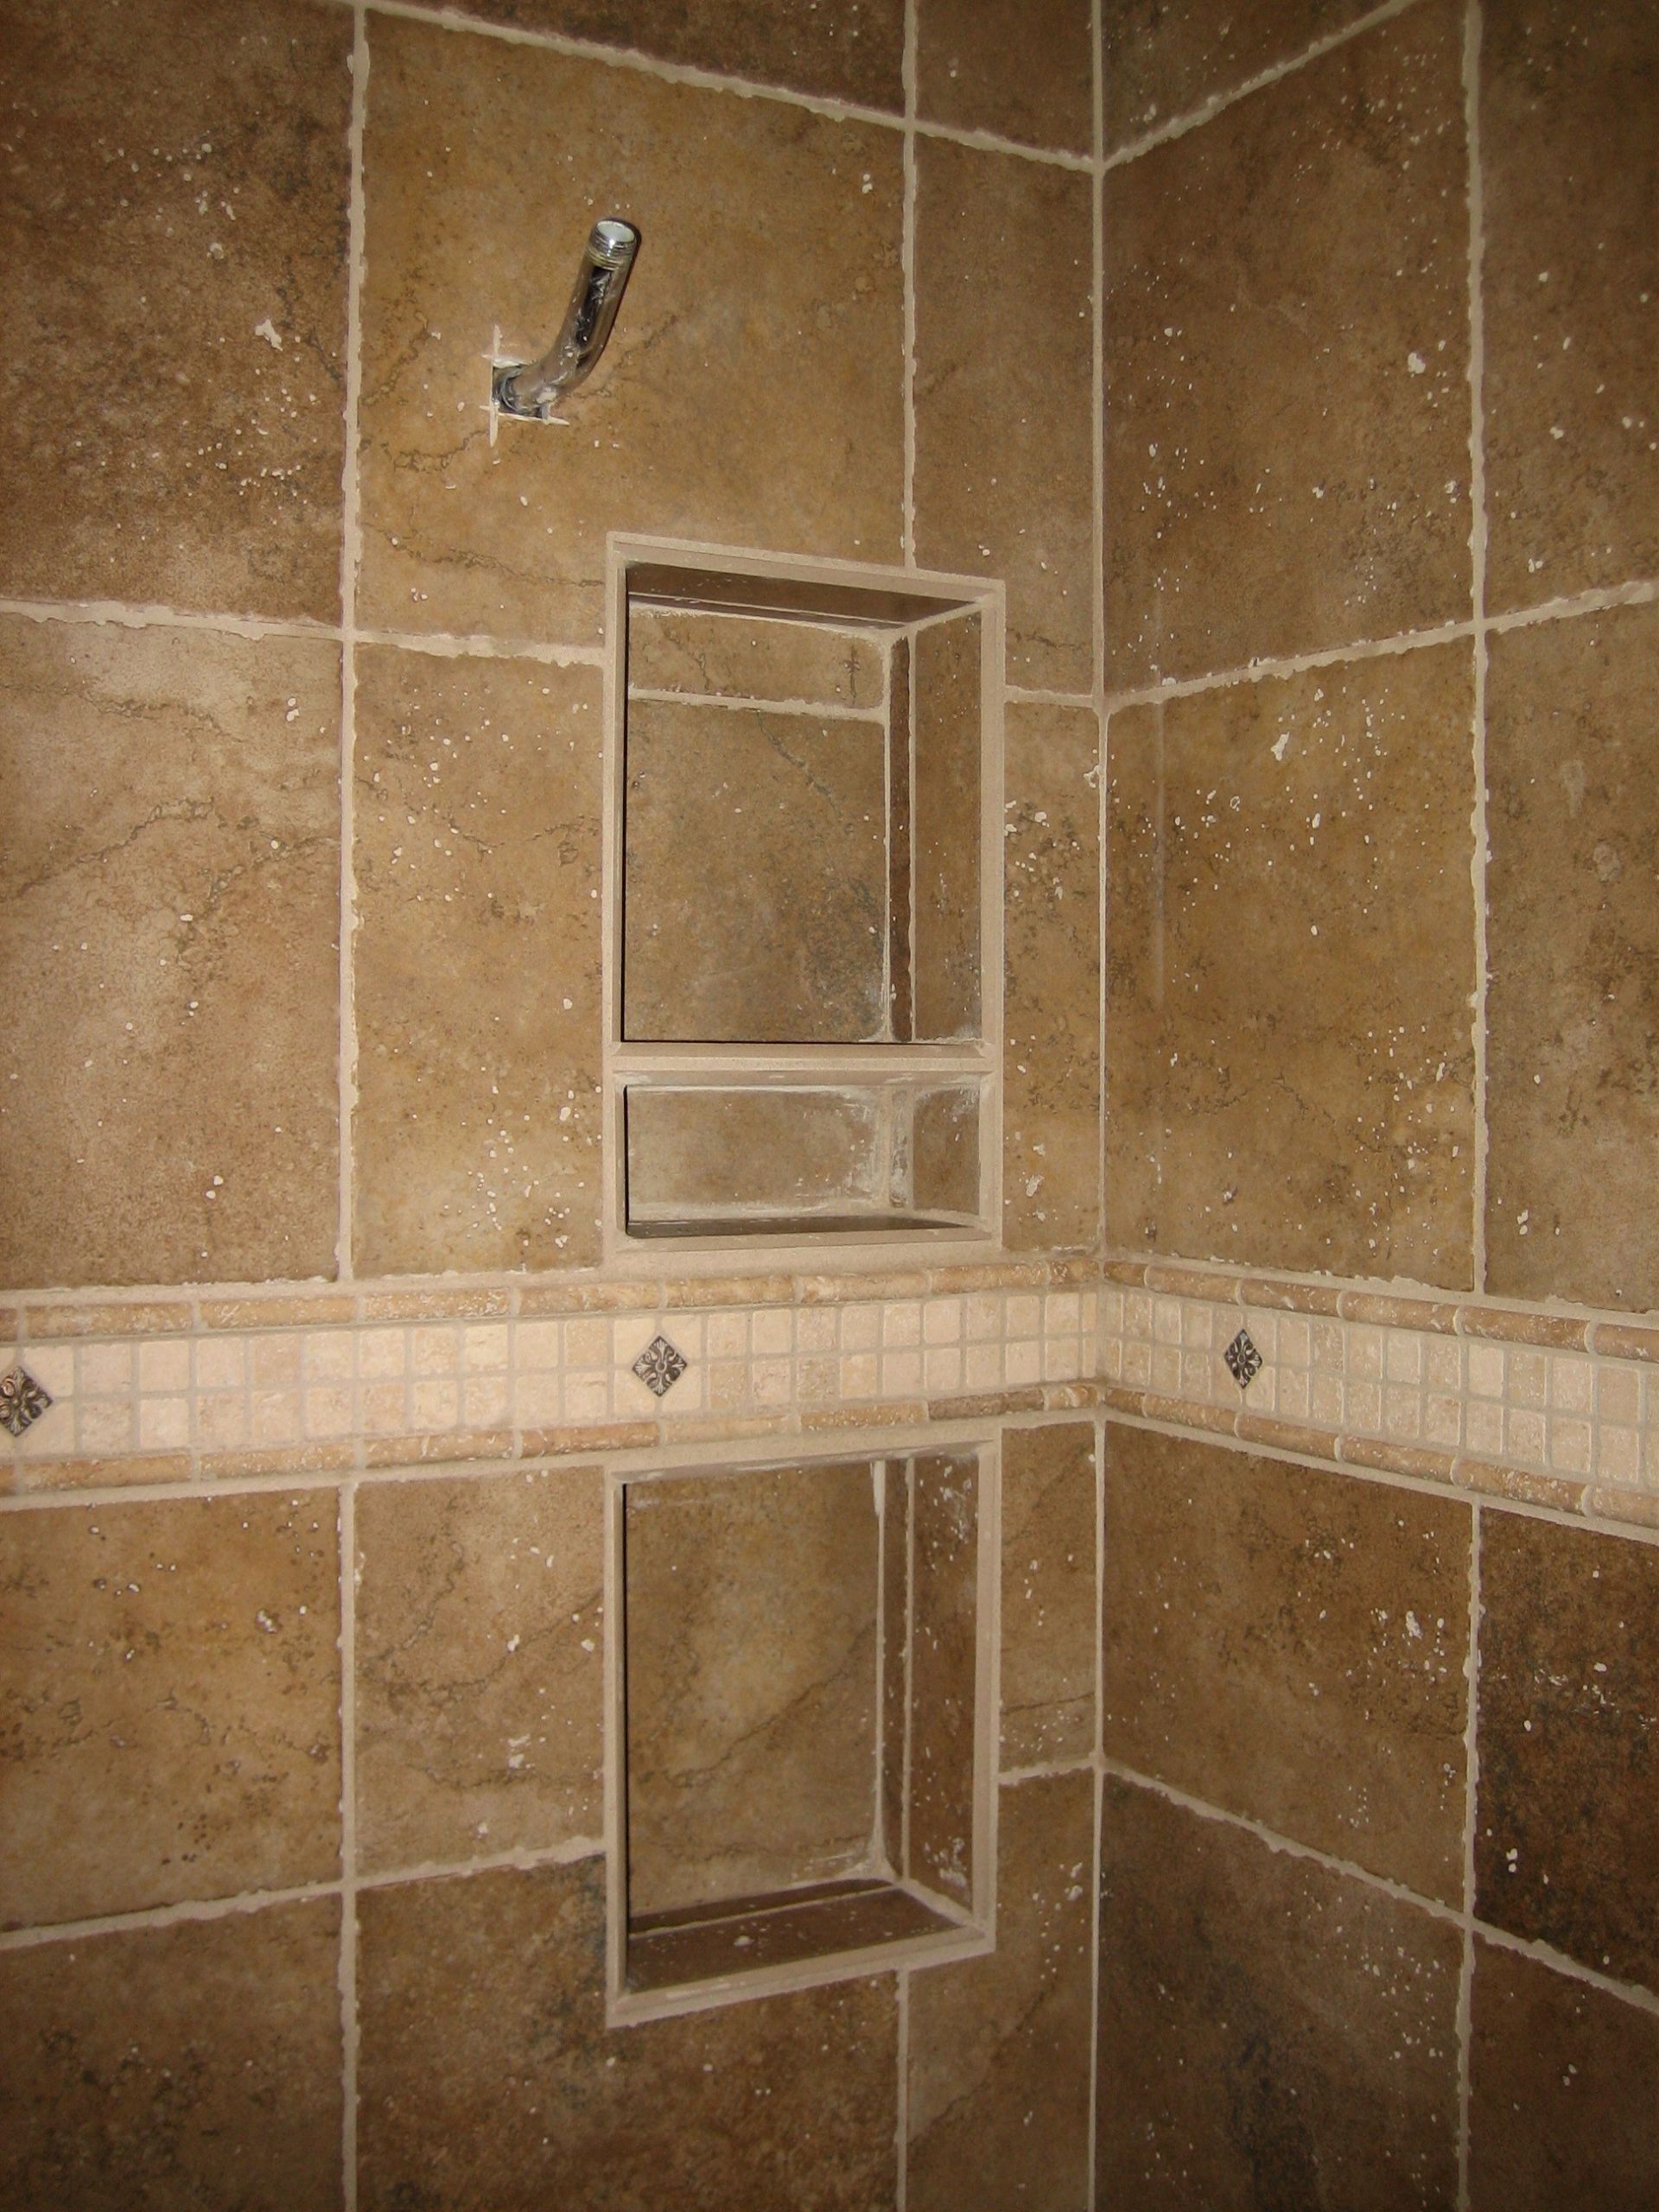 Bathroom Tile Shelves
 Do It Yourself Recessed Tile Shelves for Showers